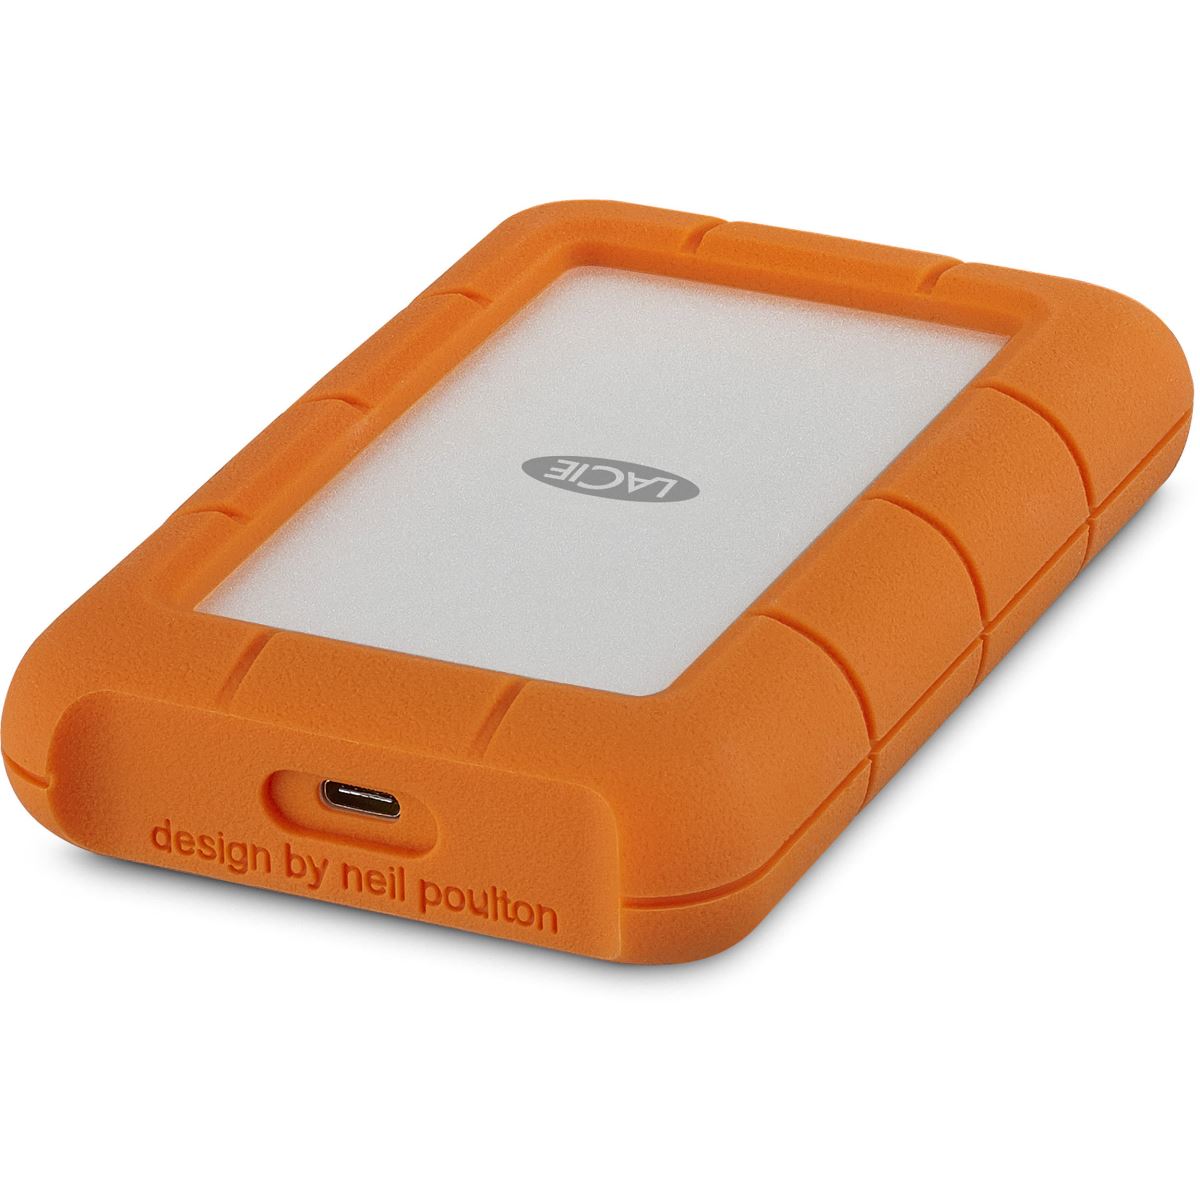 HDD extern Lacie, 1TB, Rugged, 2.5", USB3.0, argintiu si portocaliu